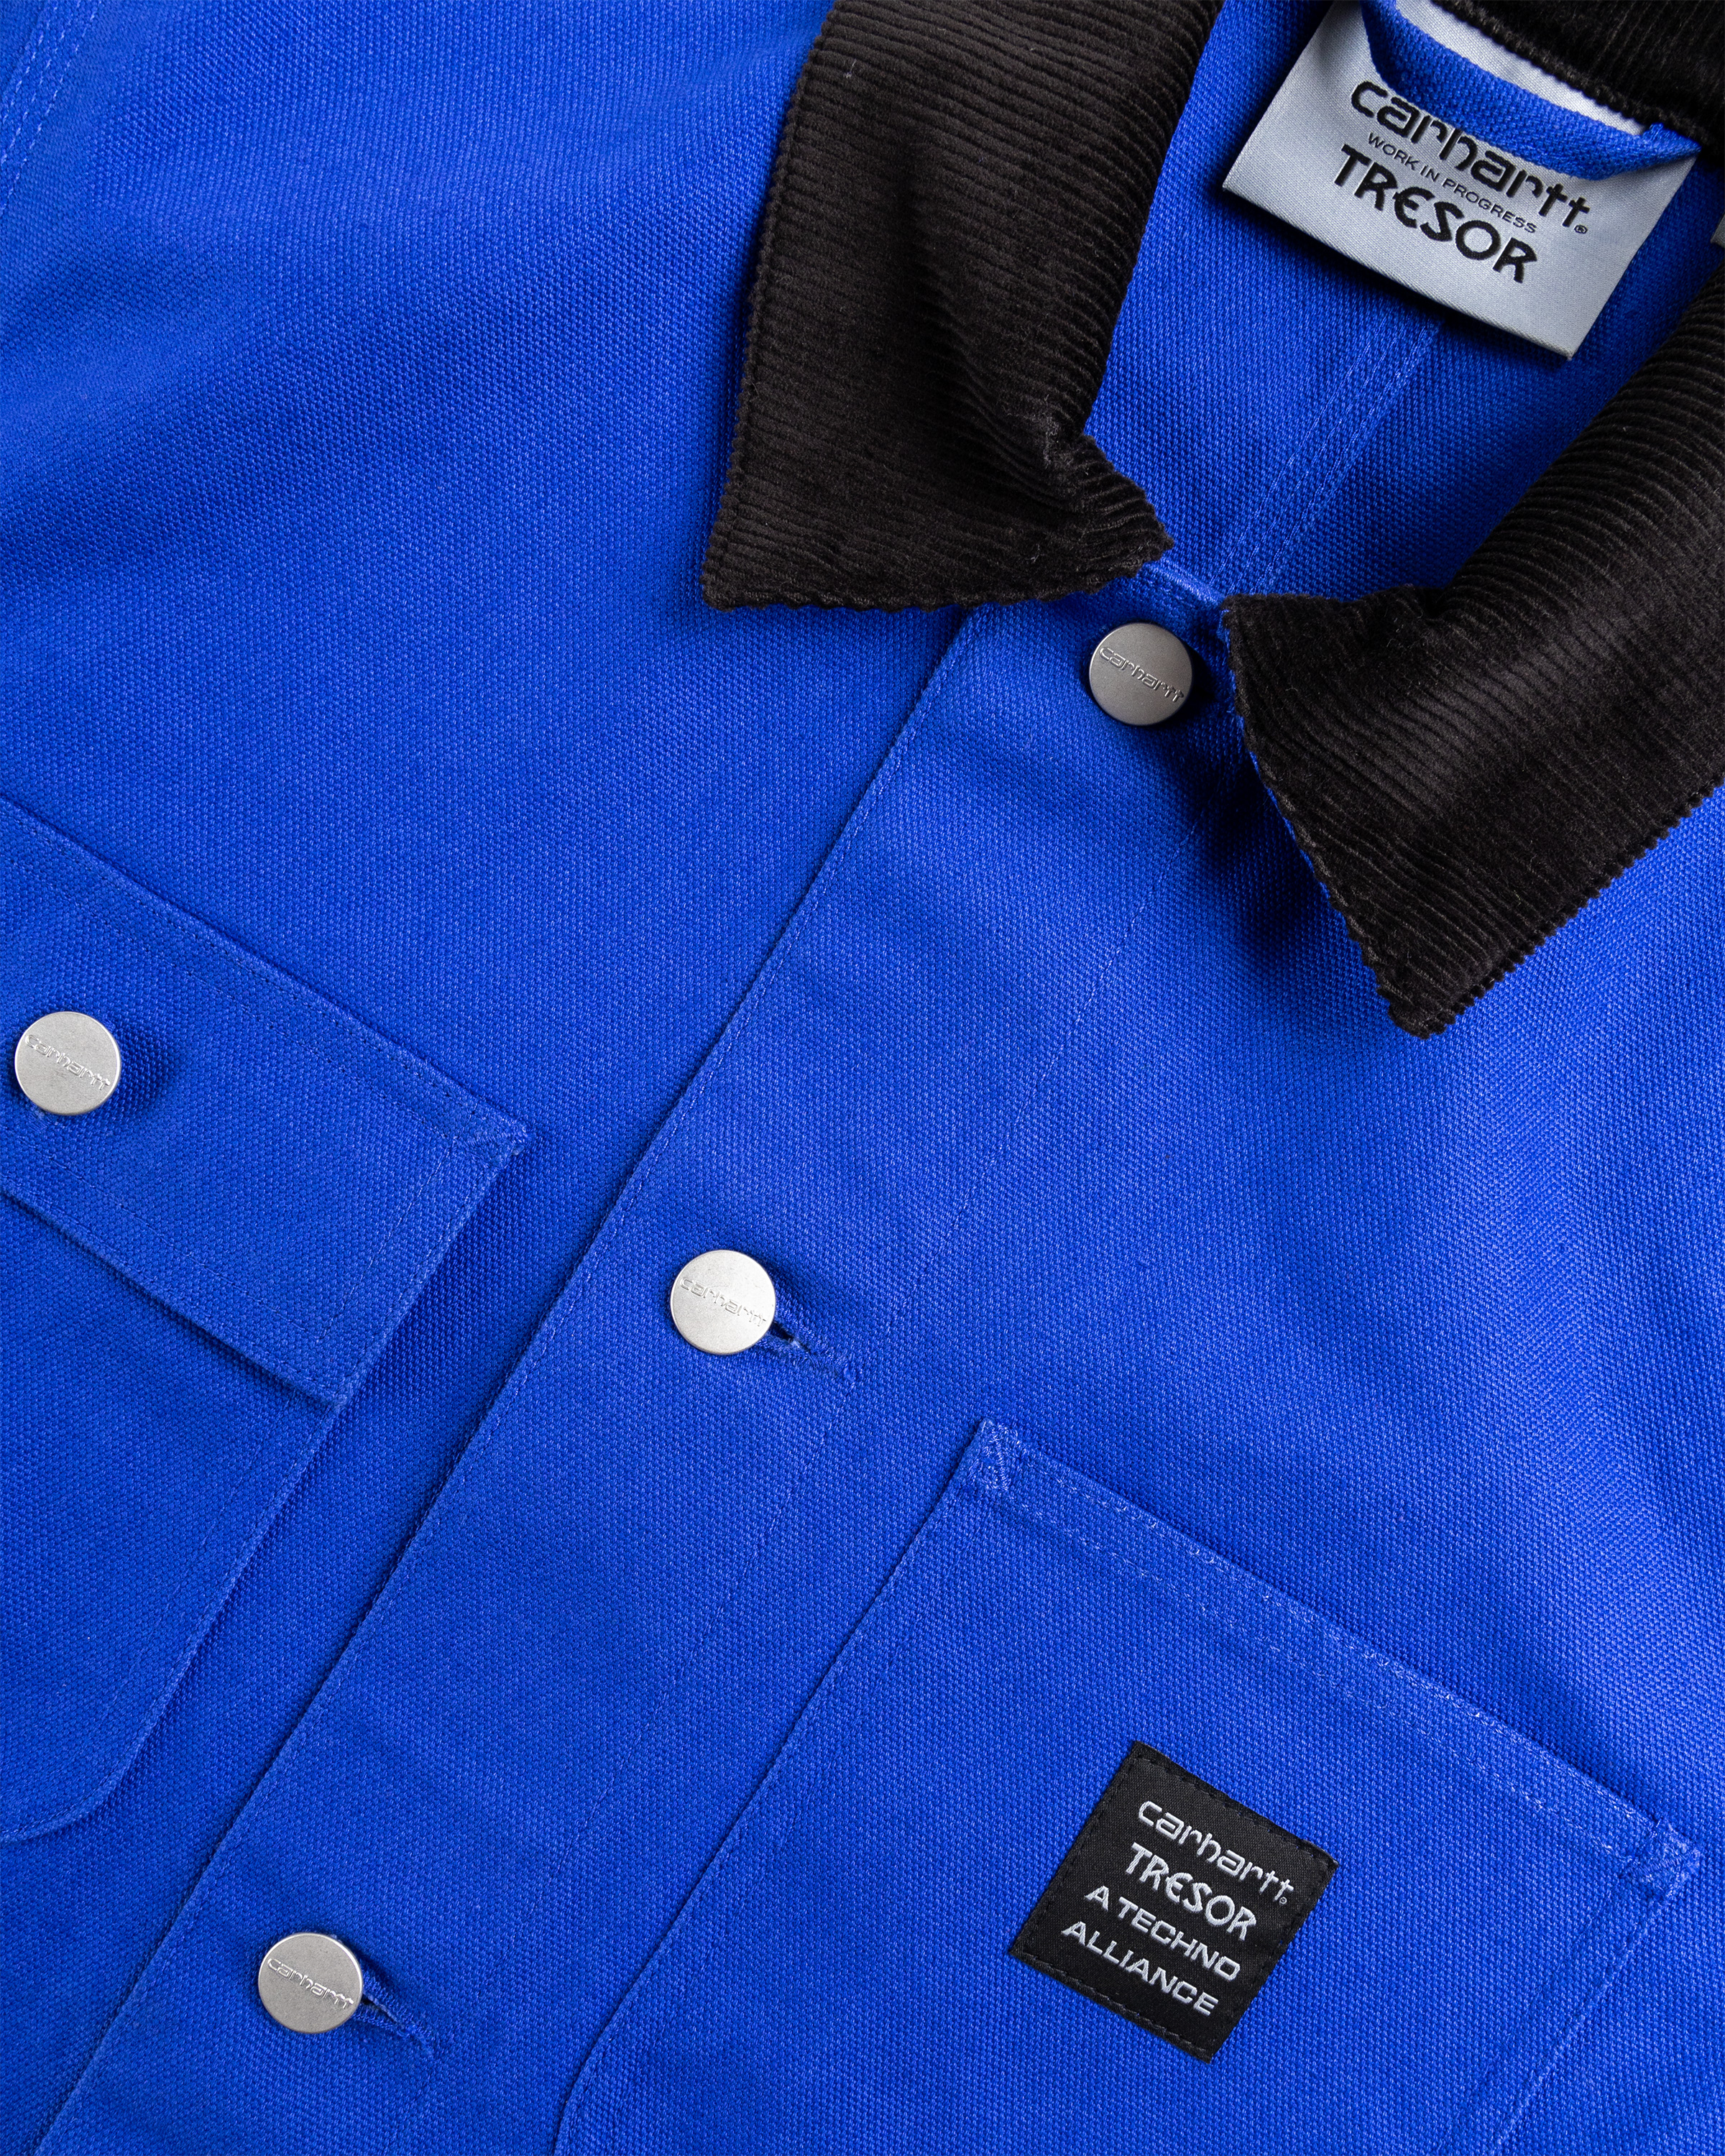 Carhartt WIP x Tresor – Way Of The Light Michigan Coat Lazurite/Dark Grey Reflective - Outerwear - Blue - Image 6